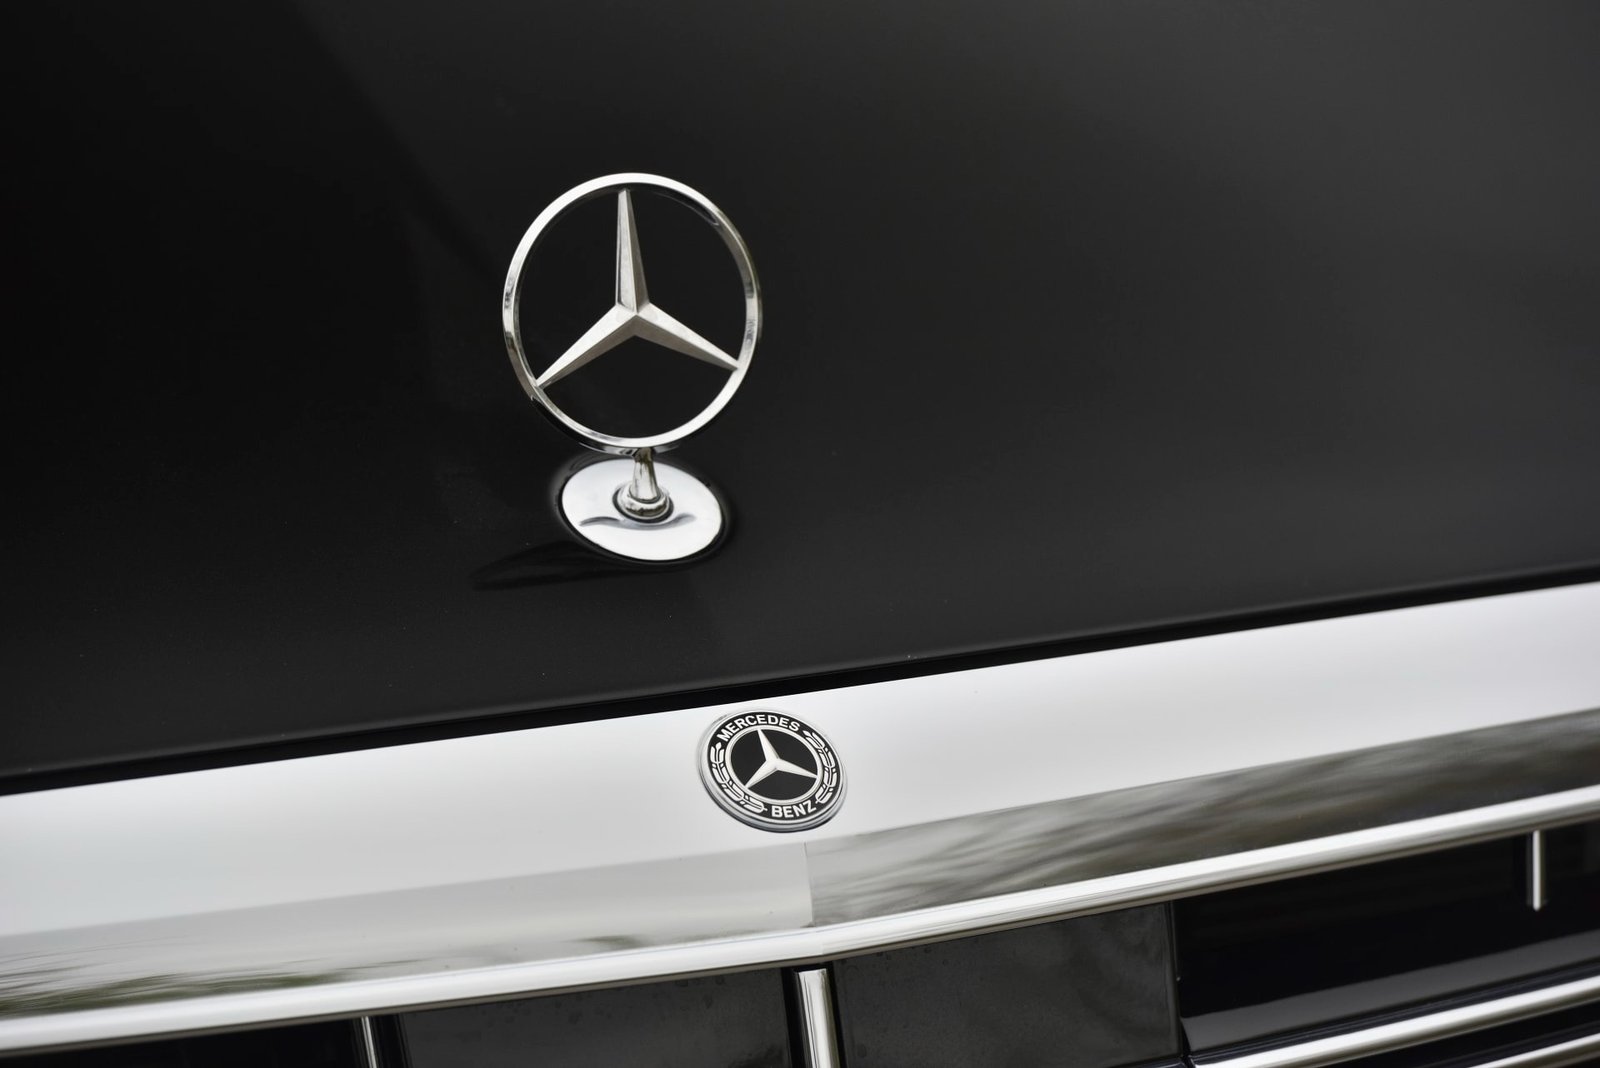 2020 Mercedes-Benz S65 AMG Final Edition Sedan (24)